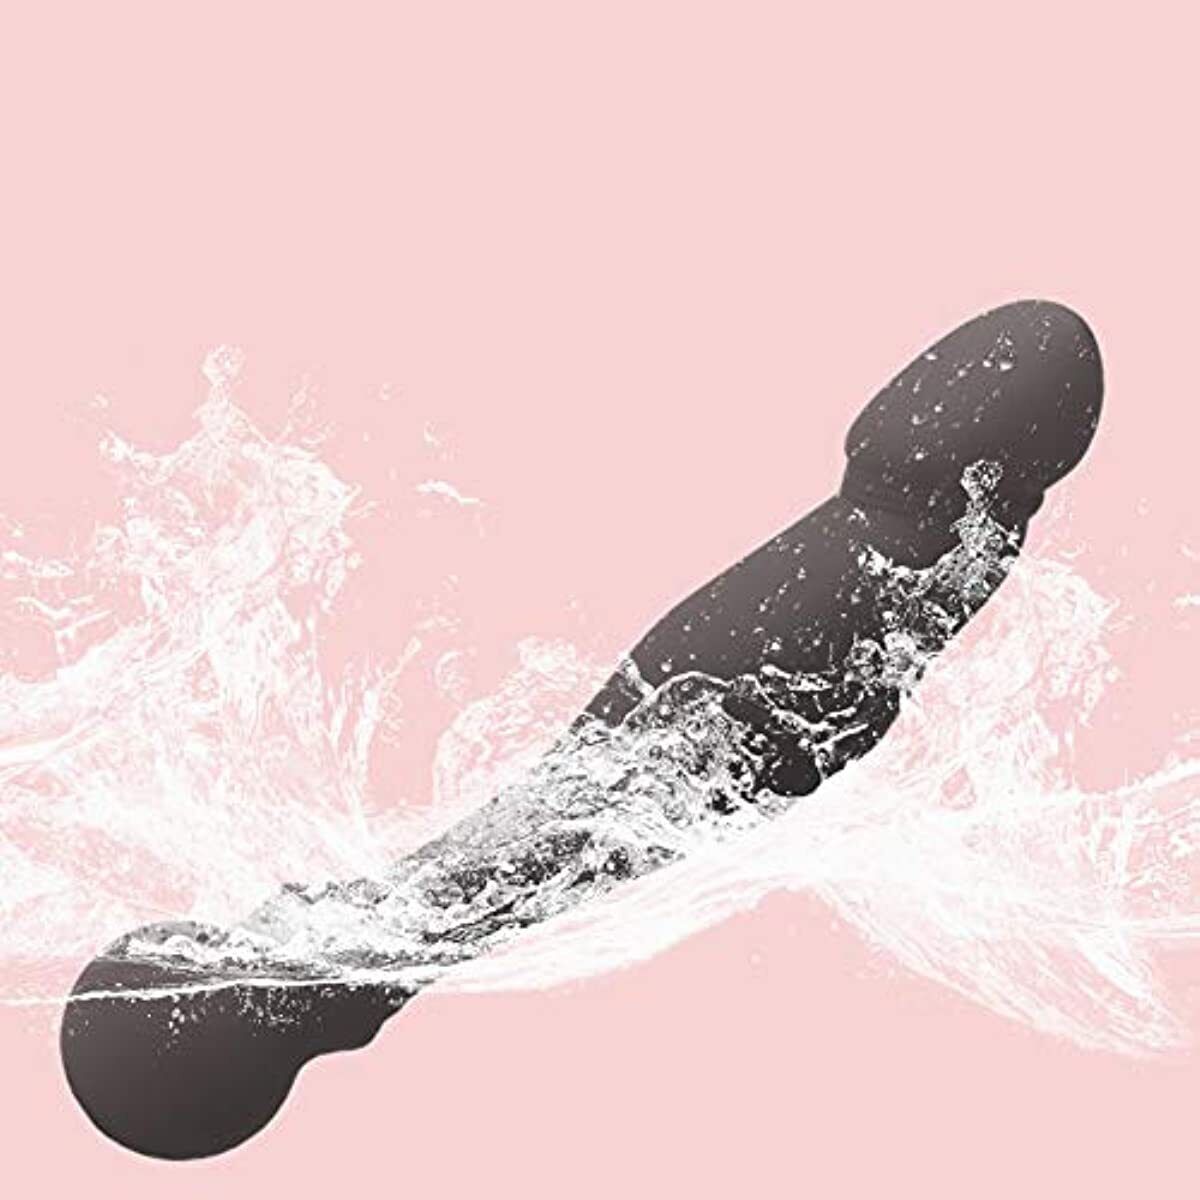 Silicone Butt Plug Dildo Prostate Massager G-spot Stimulation Anal Plug Sex Toy